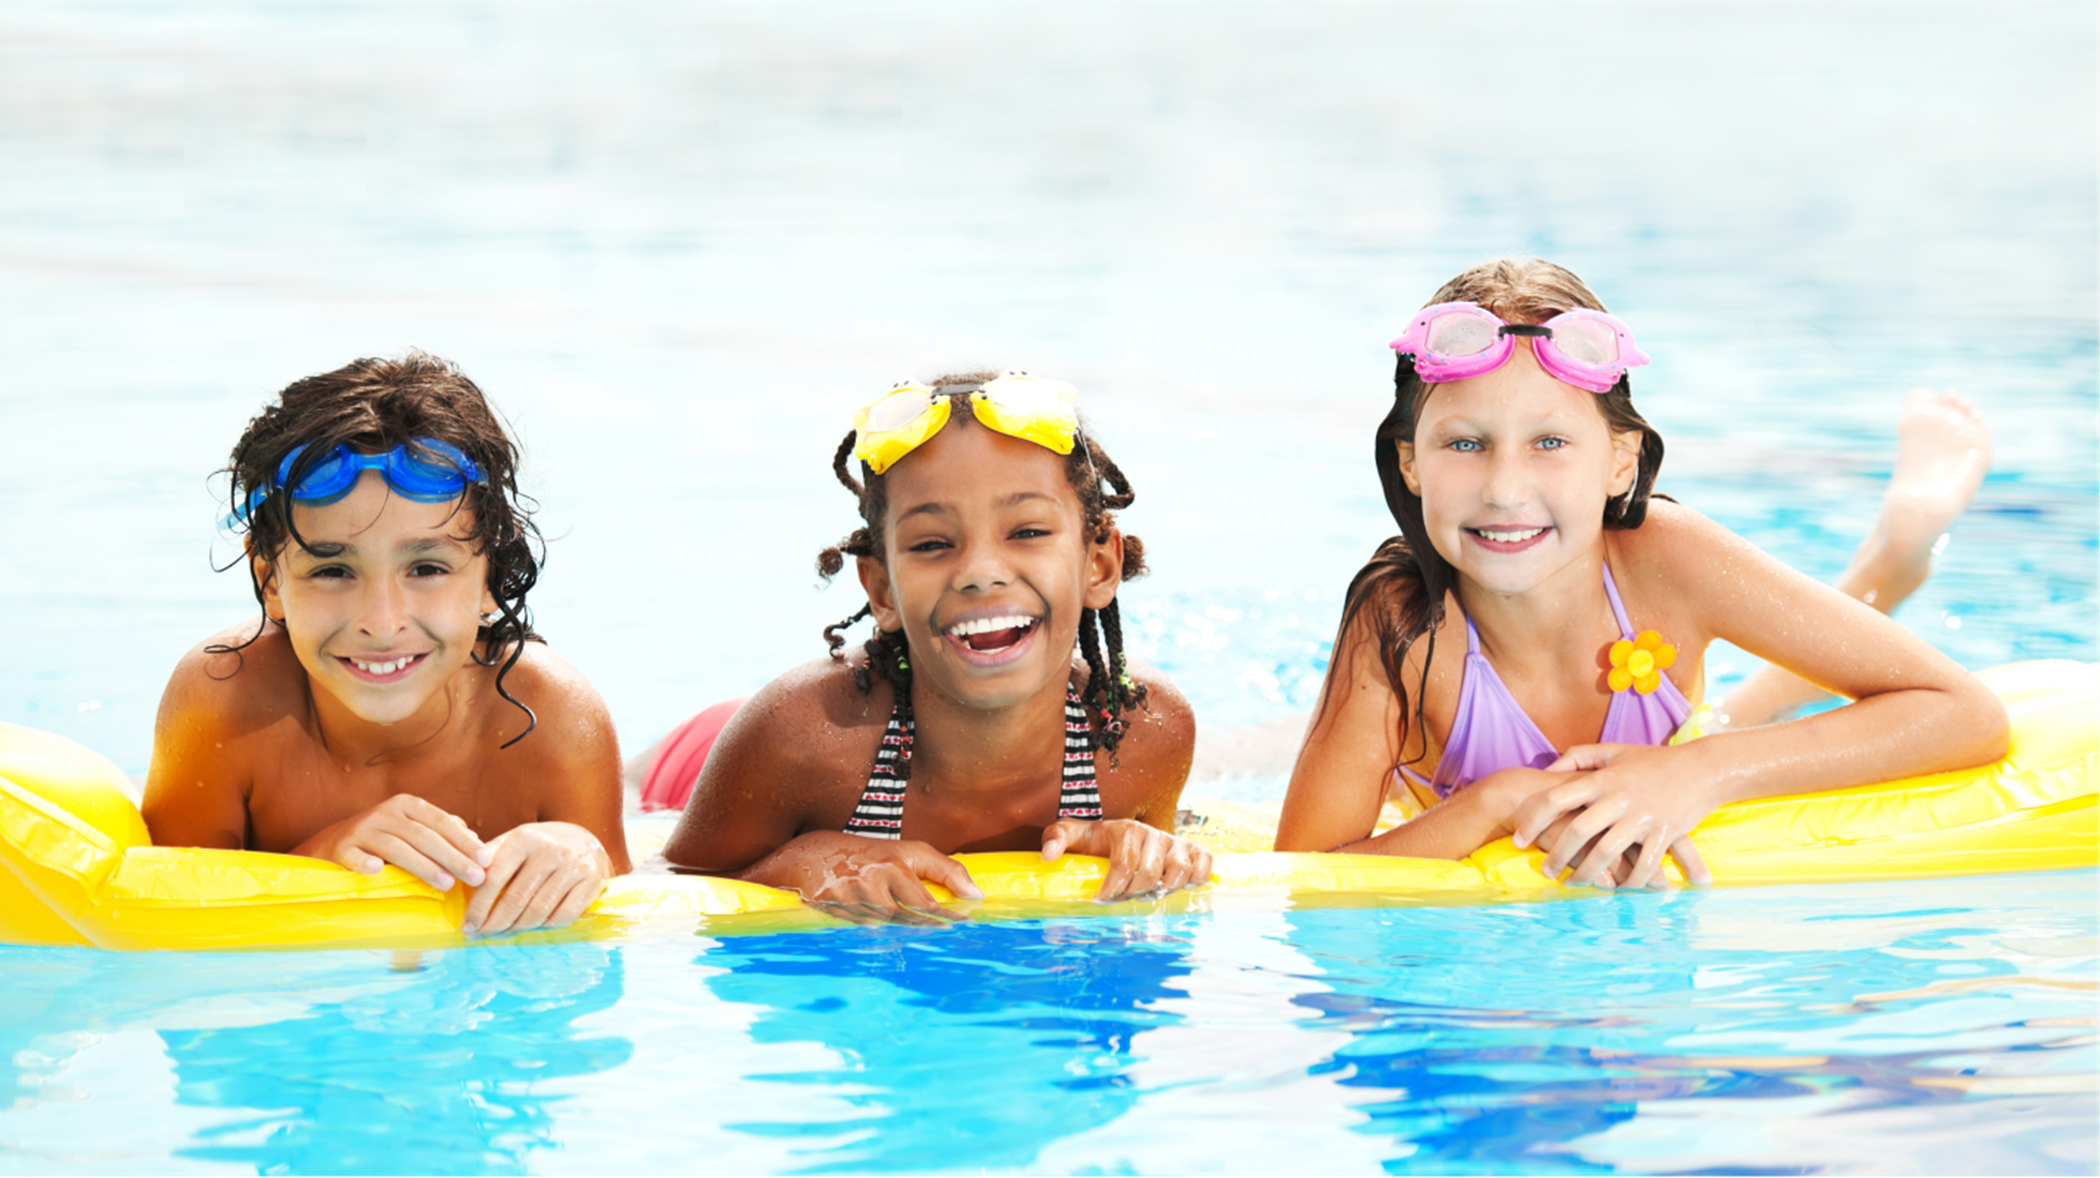 Kids in swimming pool